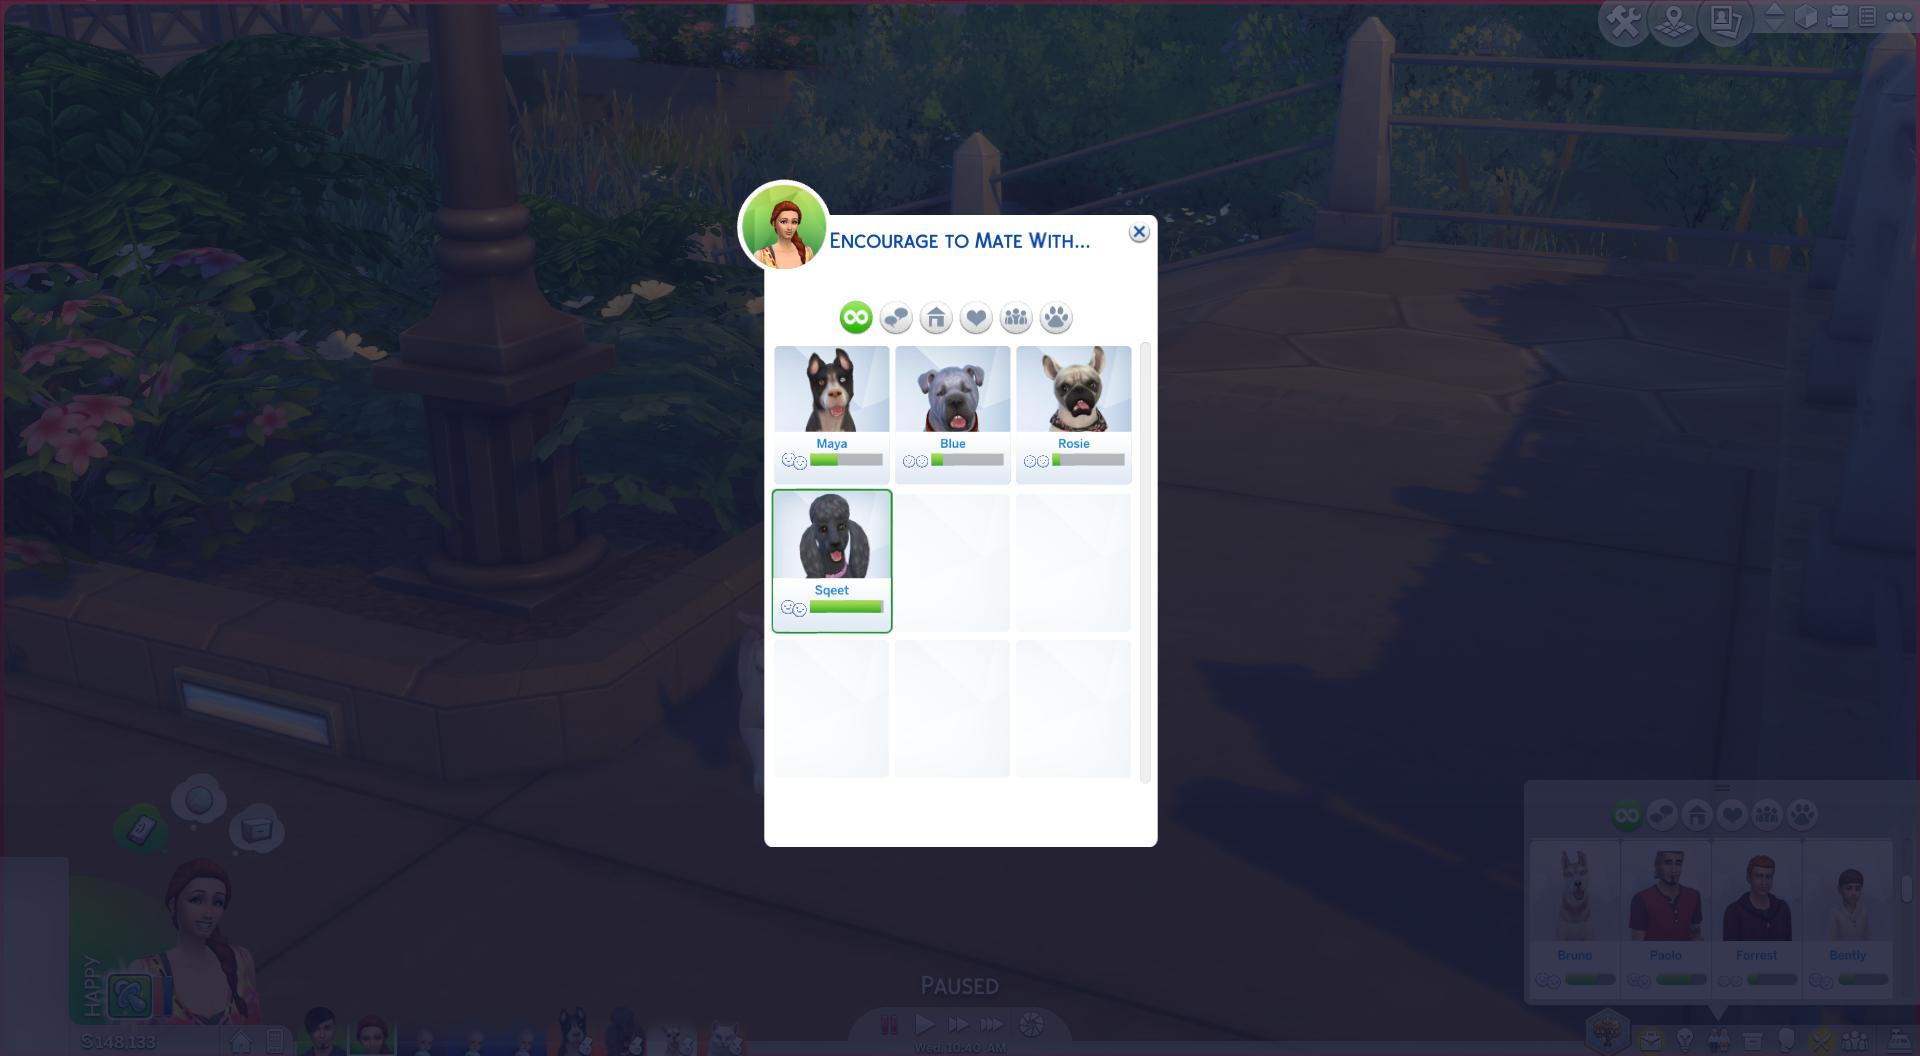 Bloo Bagoo! MeUndies has made its way into the world of The Sims 4! : r/ MeUndies